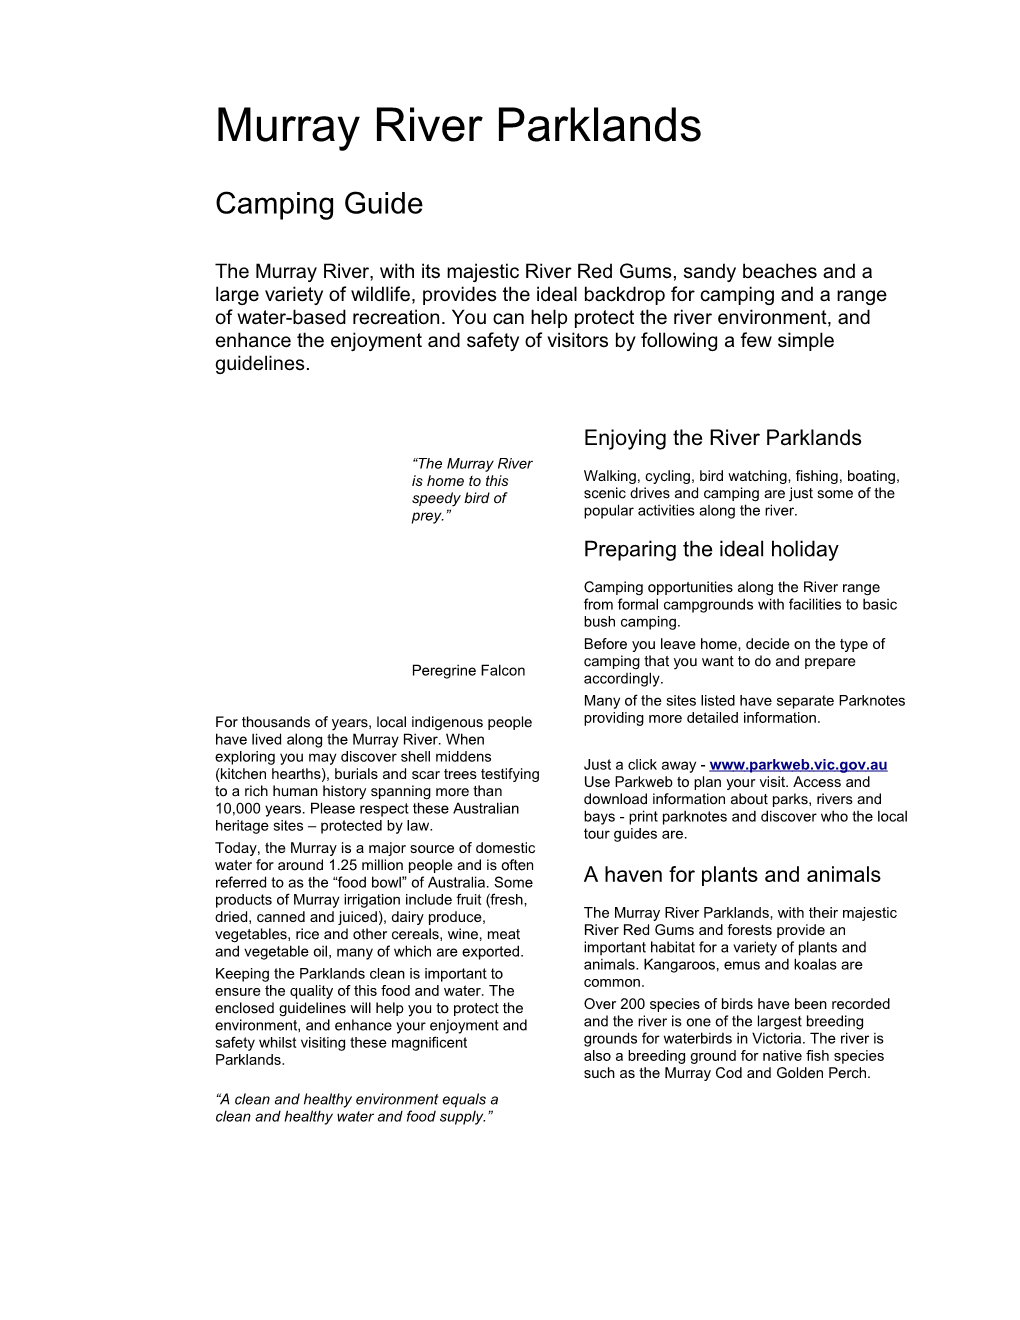 Murray River Parklands Camping Guide